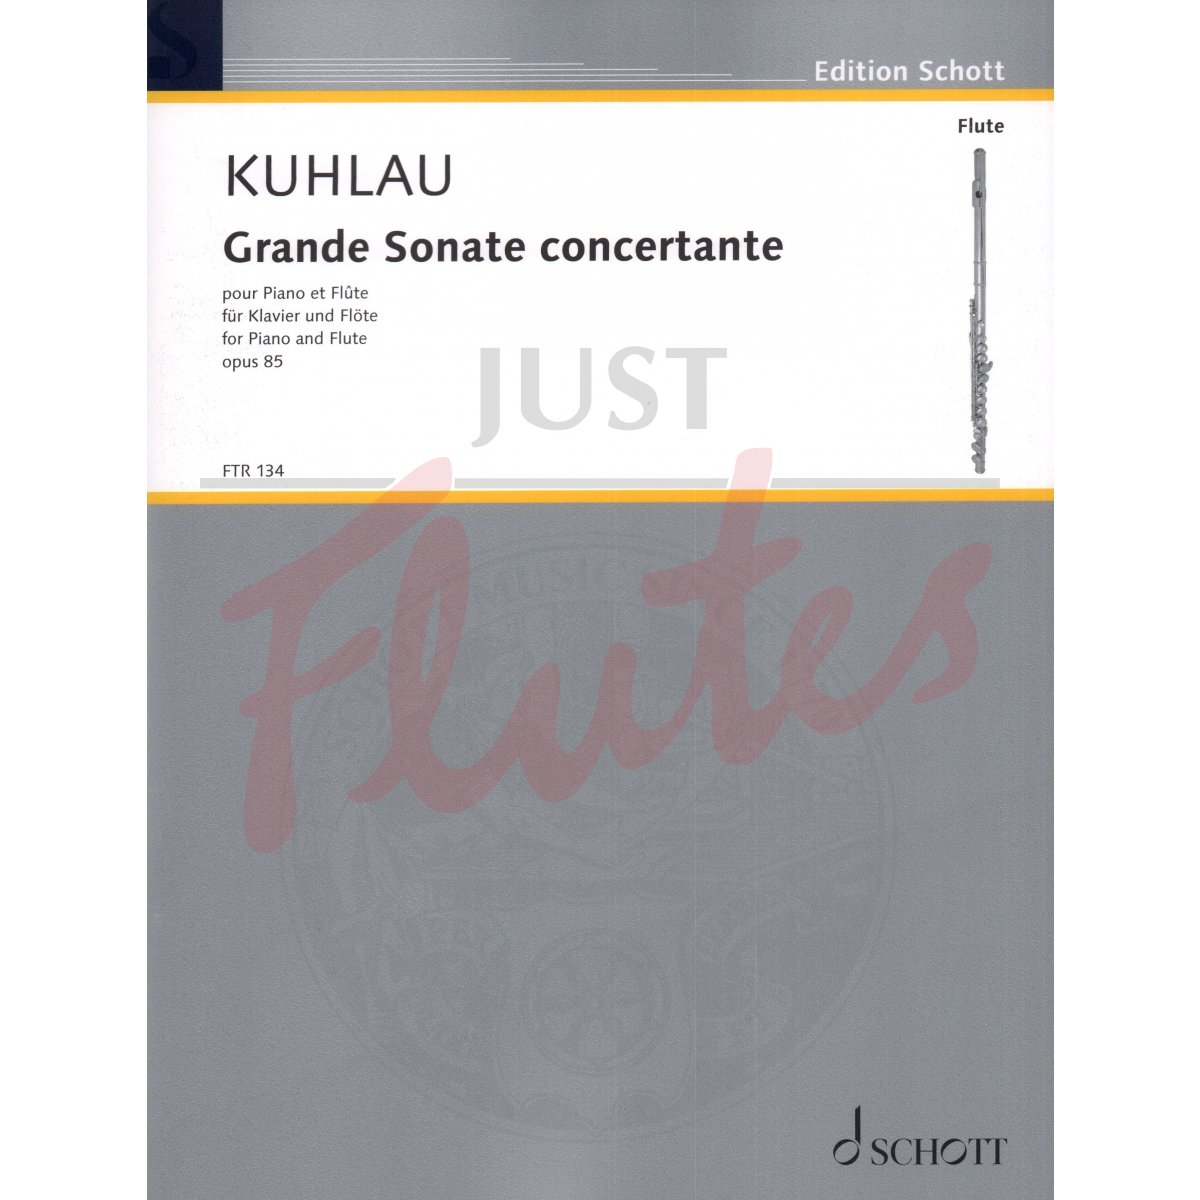 Grande Sonate Concertante for Flute and Piano